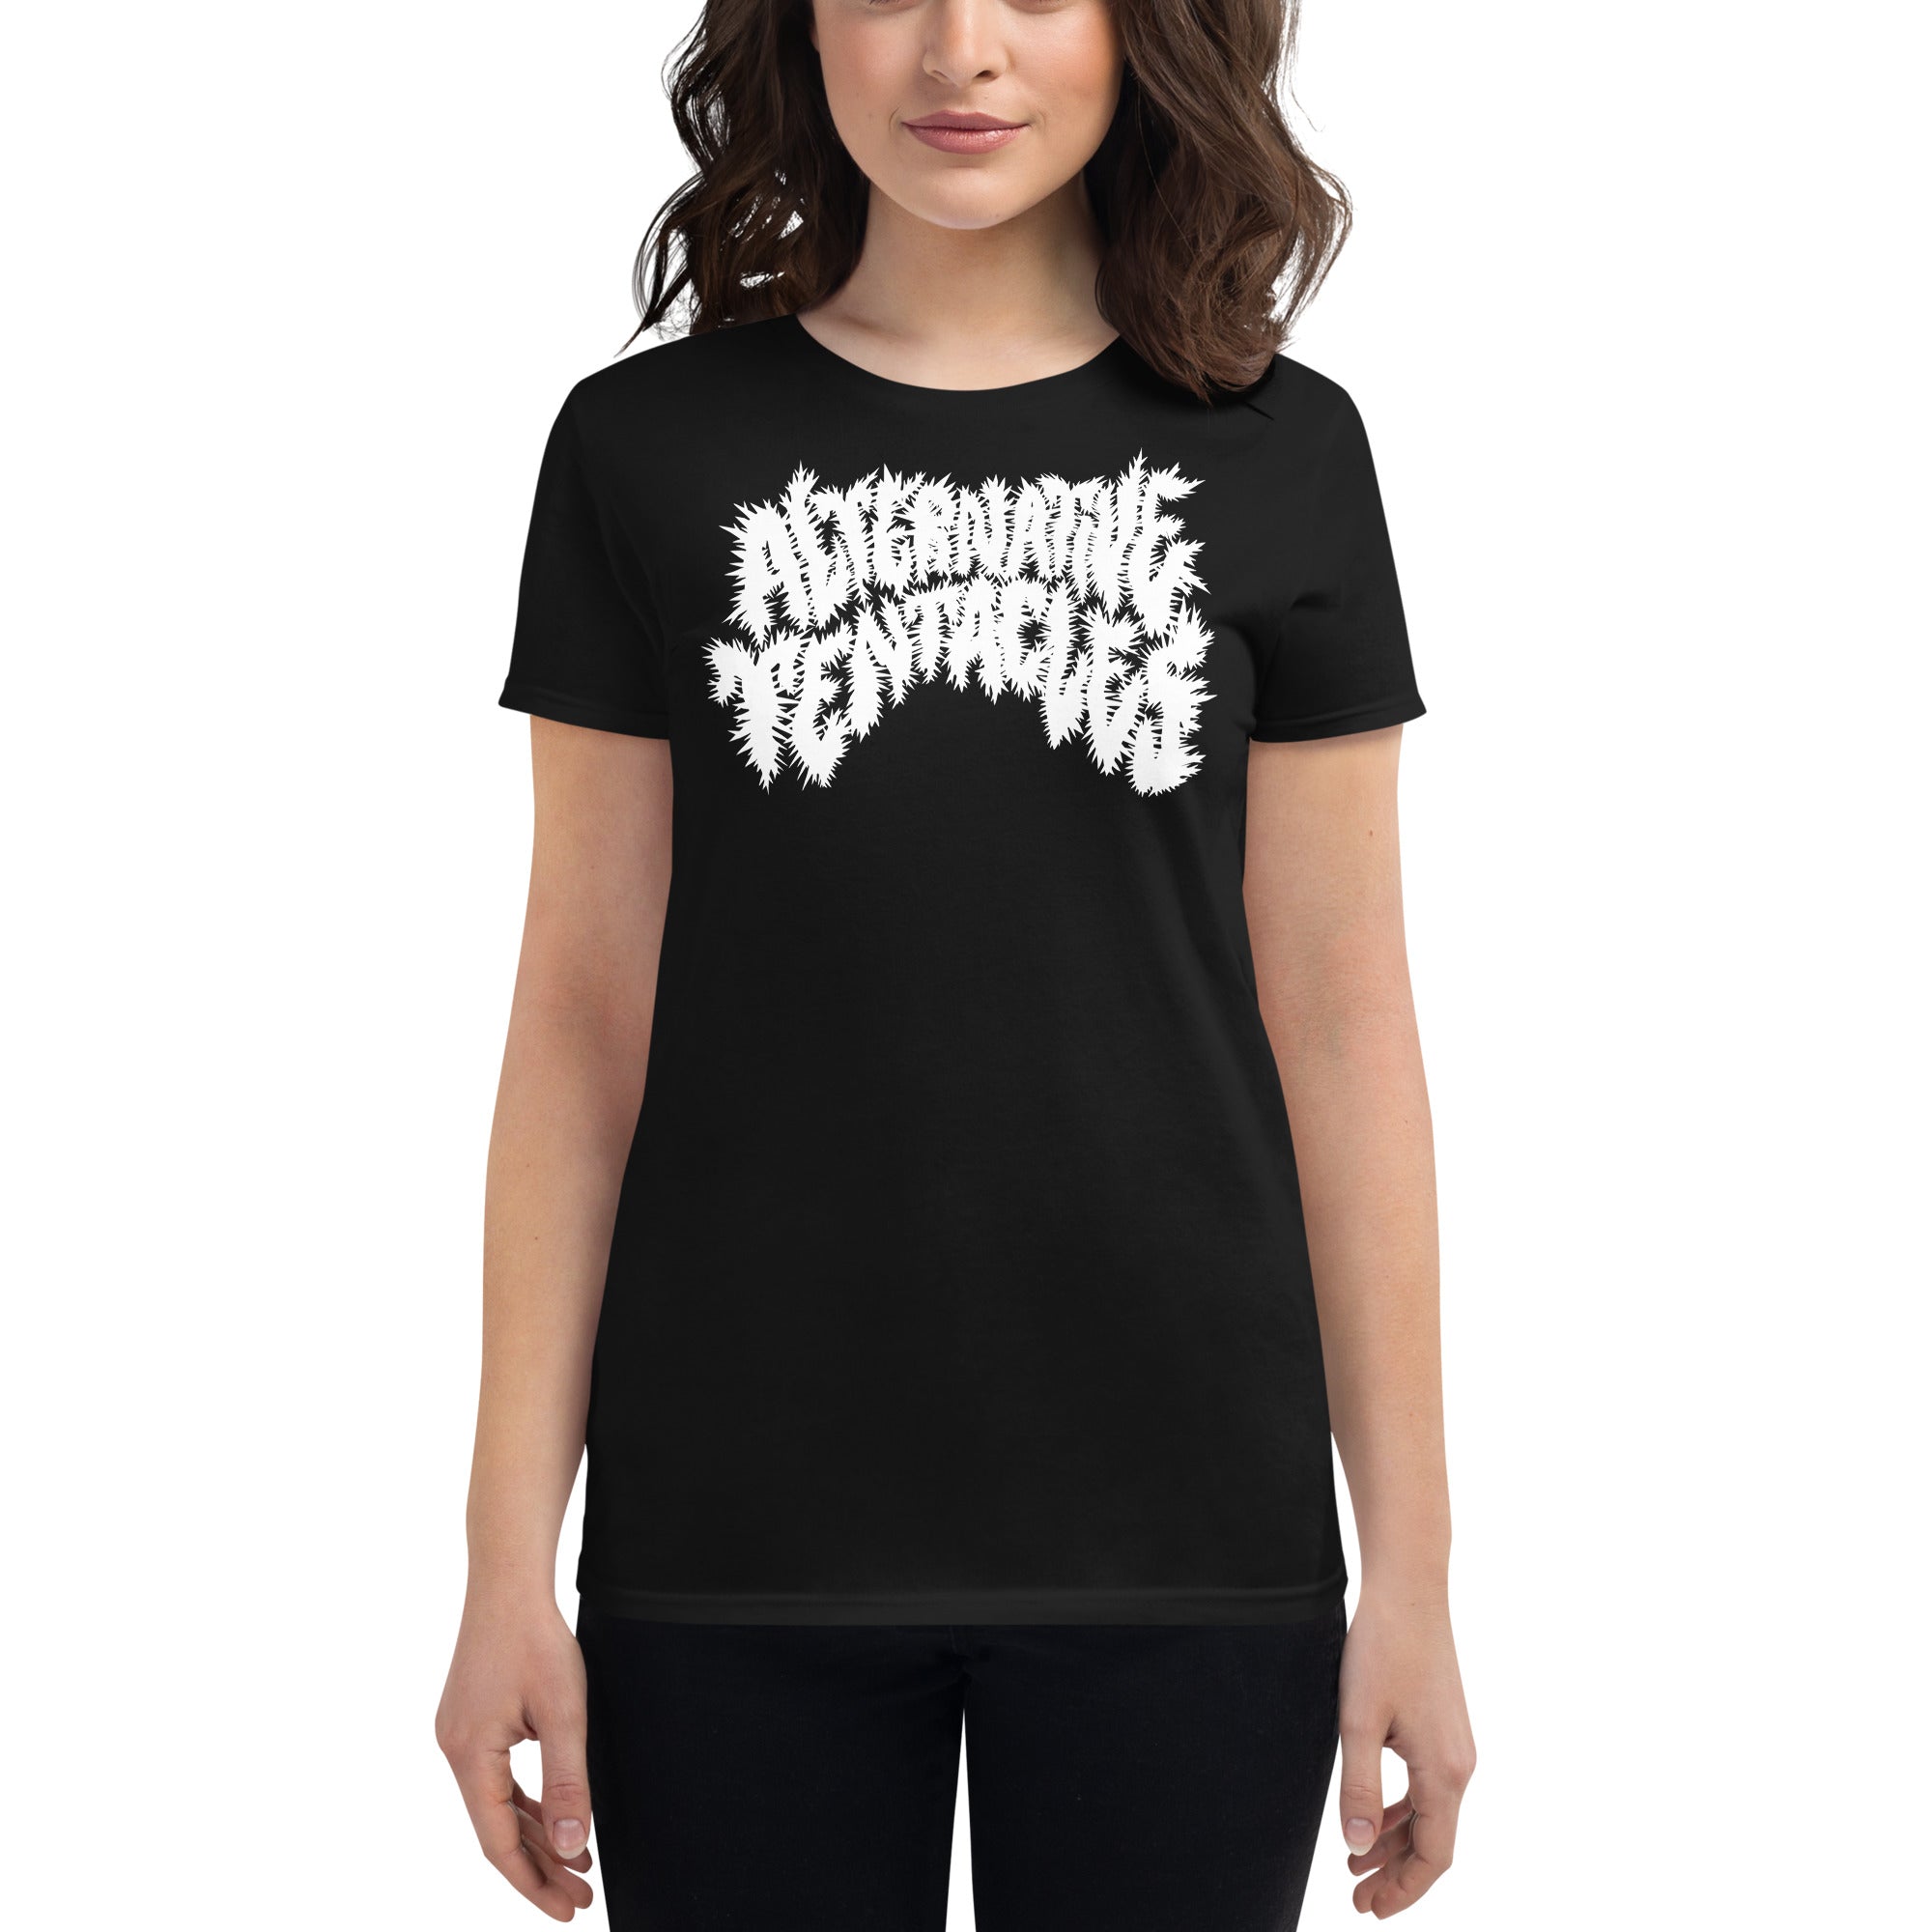 A.T. "Thorns" Femme Black T-shirt